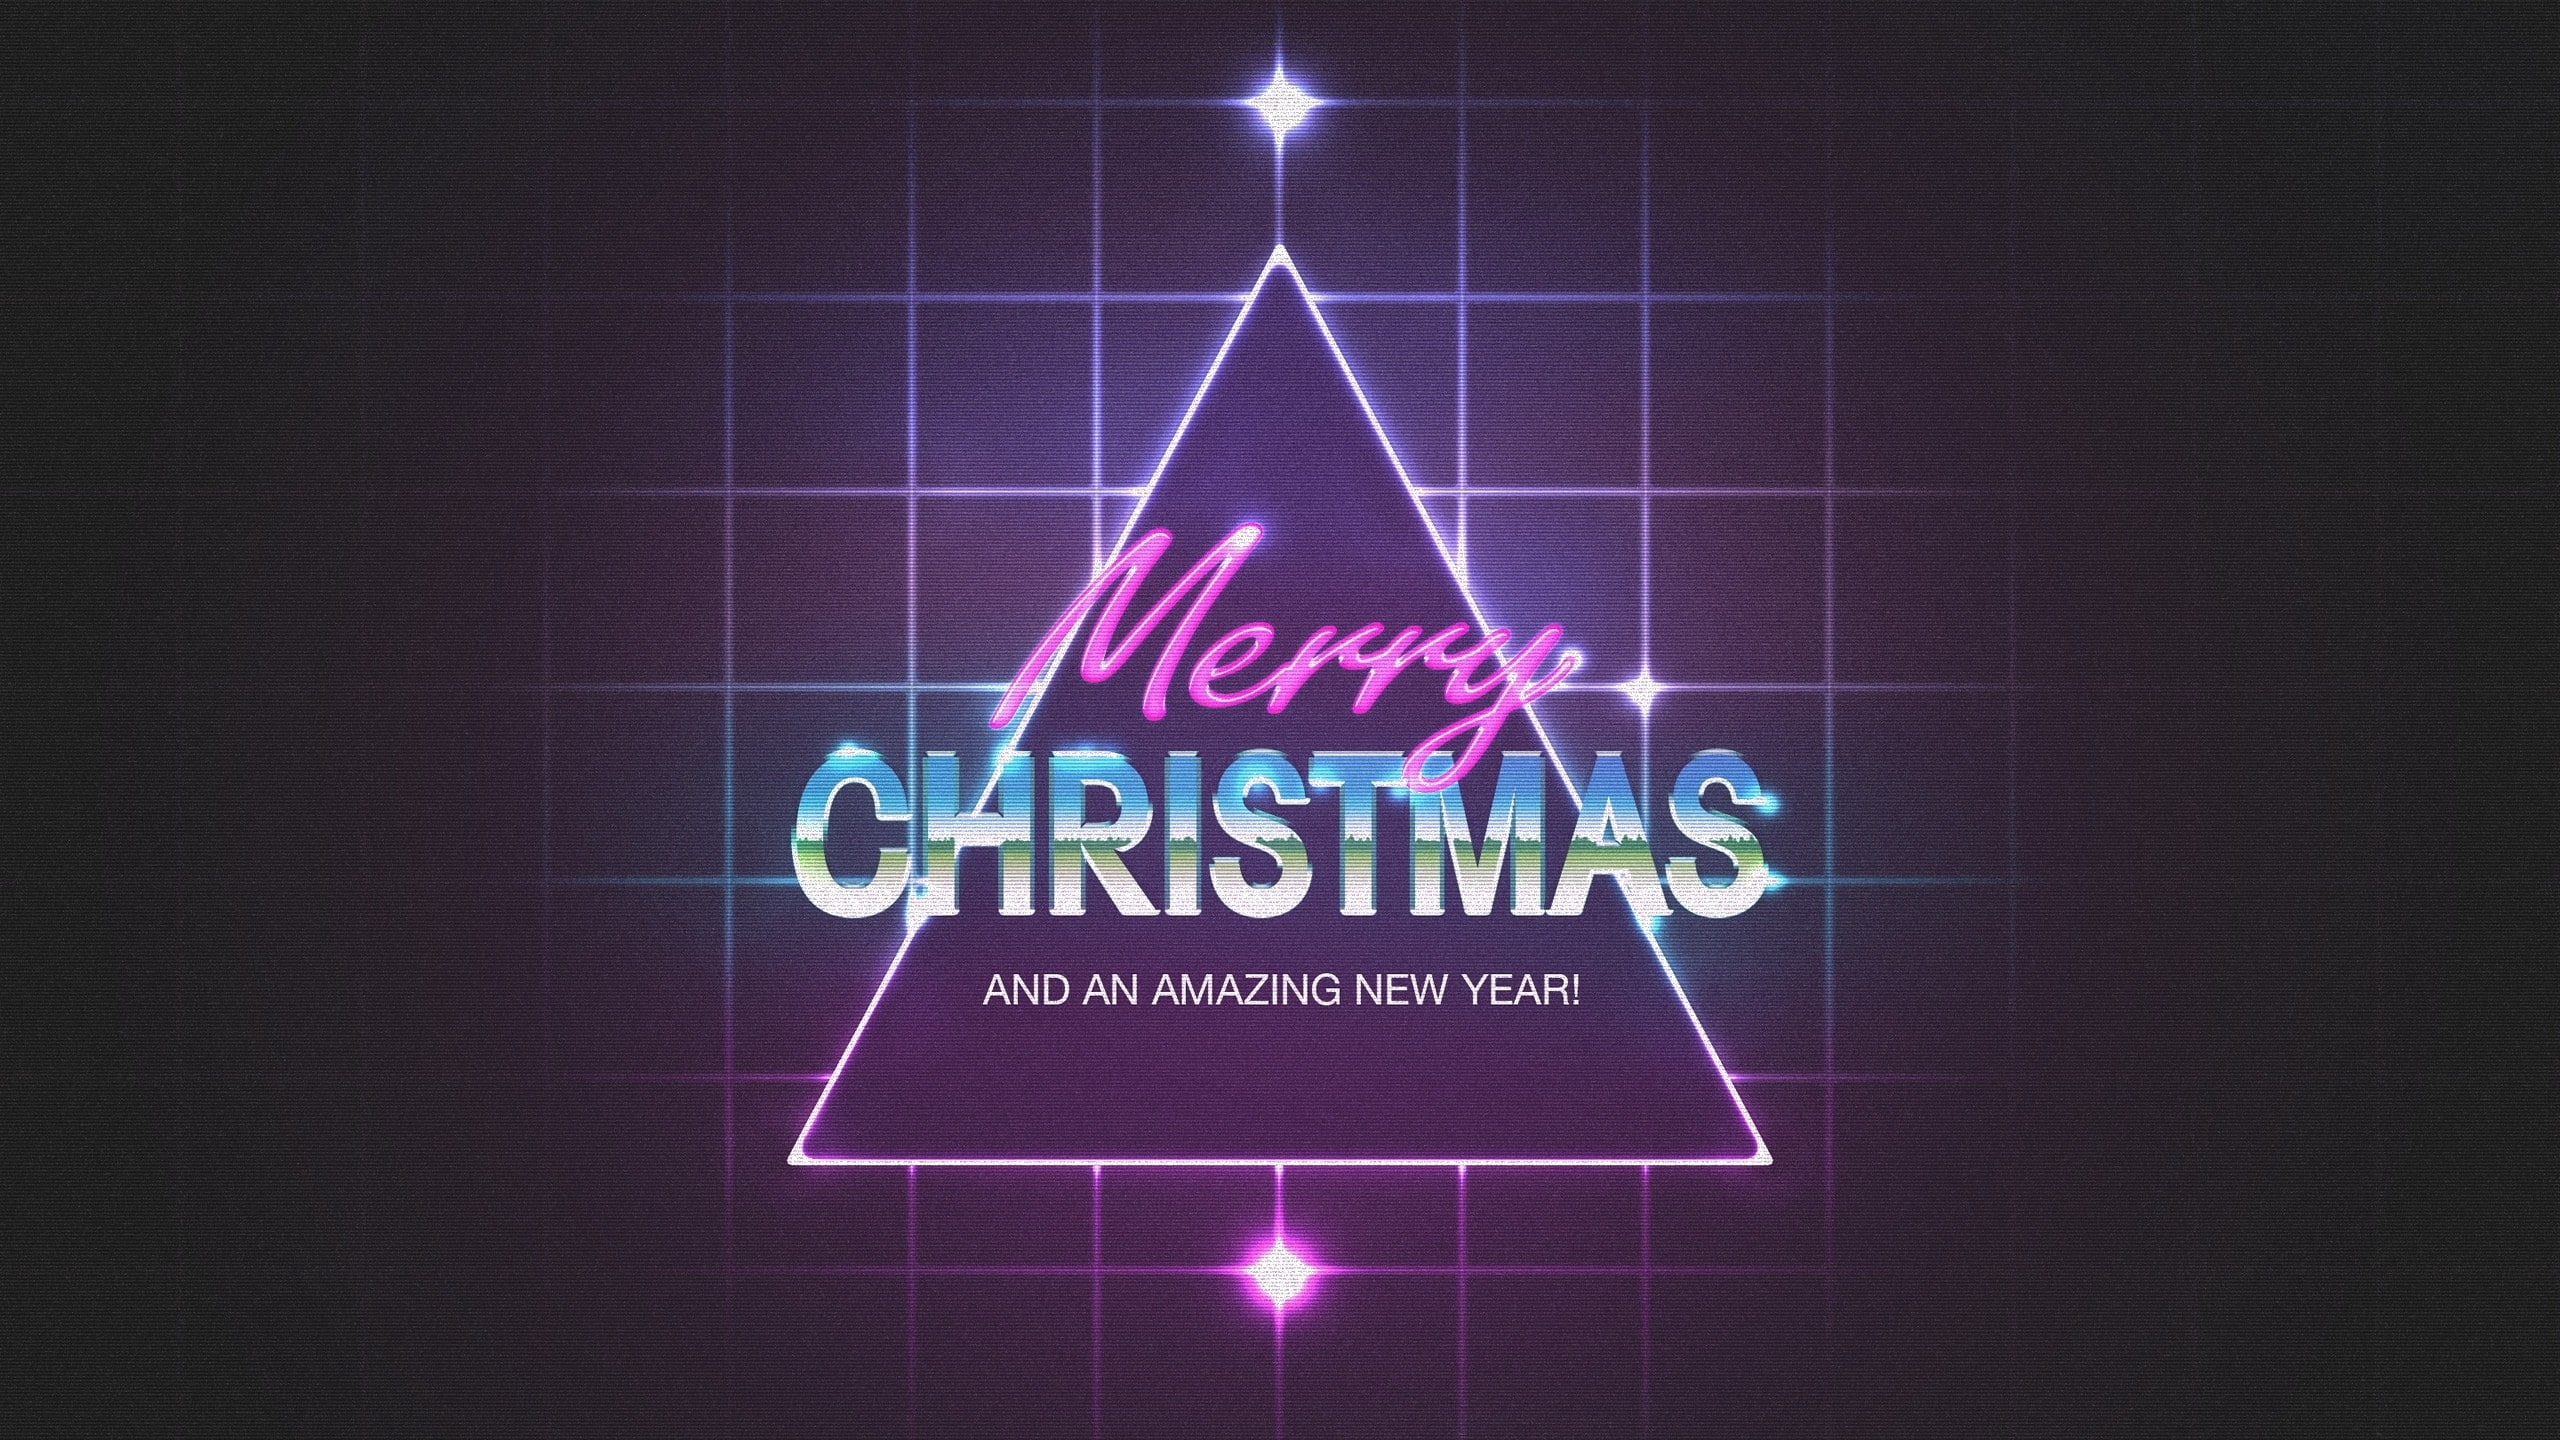 1980s, Christmas, triangle, purple